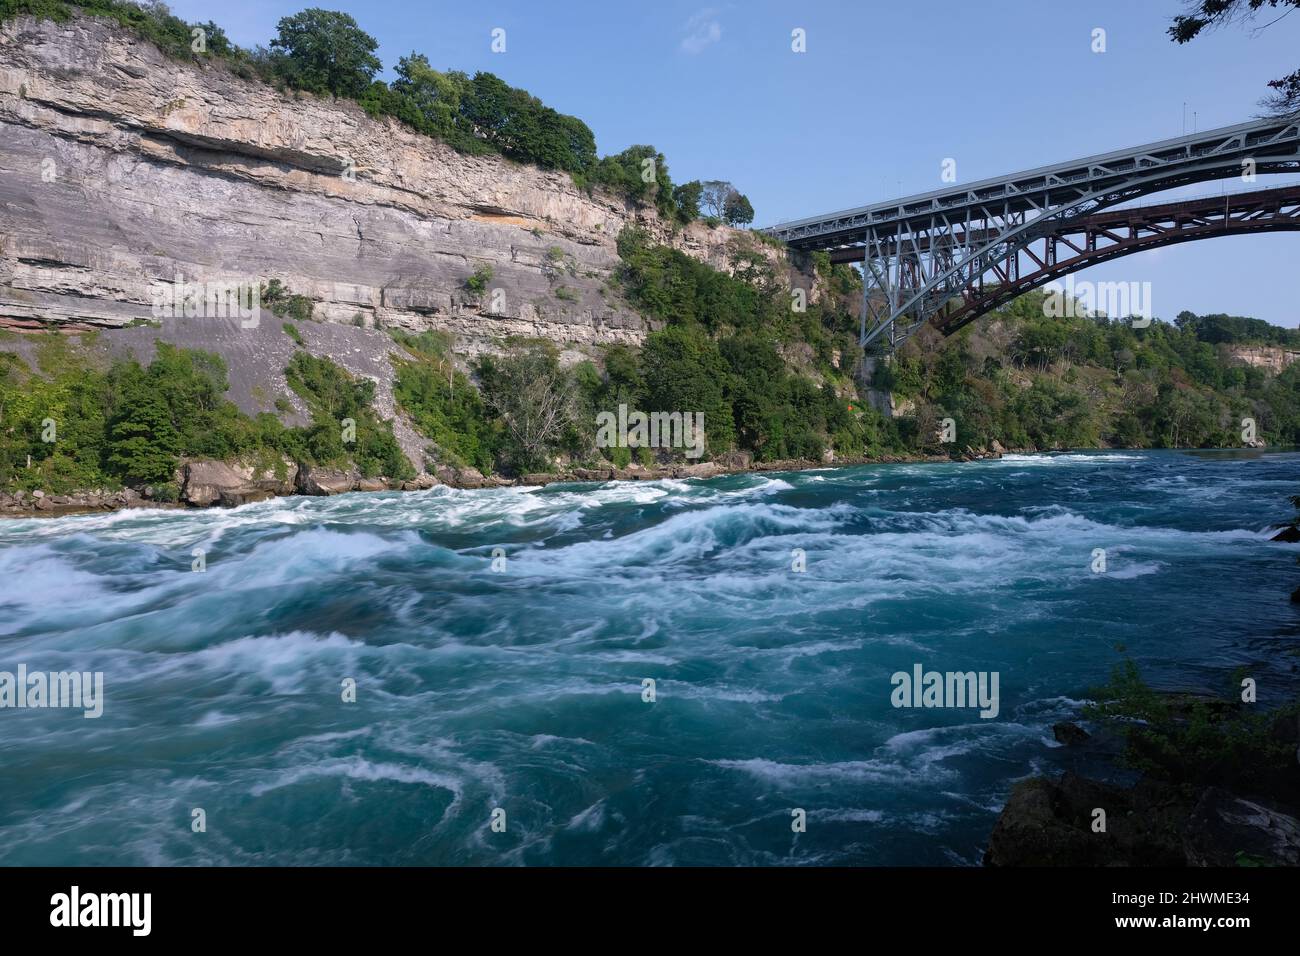 Shot of the Great Gorge and bridge from the boardwalk of the White Water Walk, Niagara Falls, Niagara, Ontario, Canada. Stock Photo